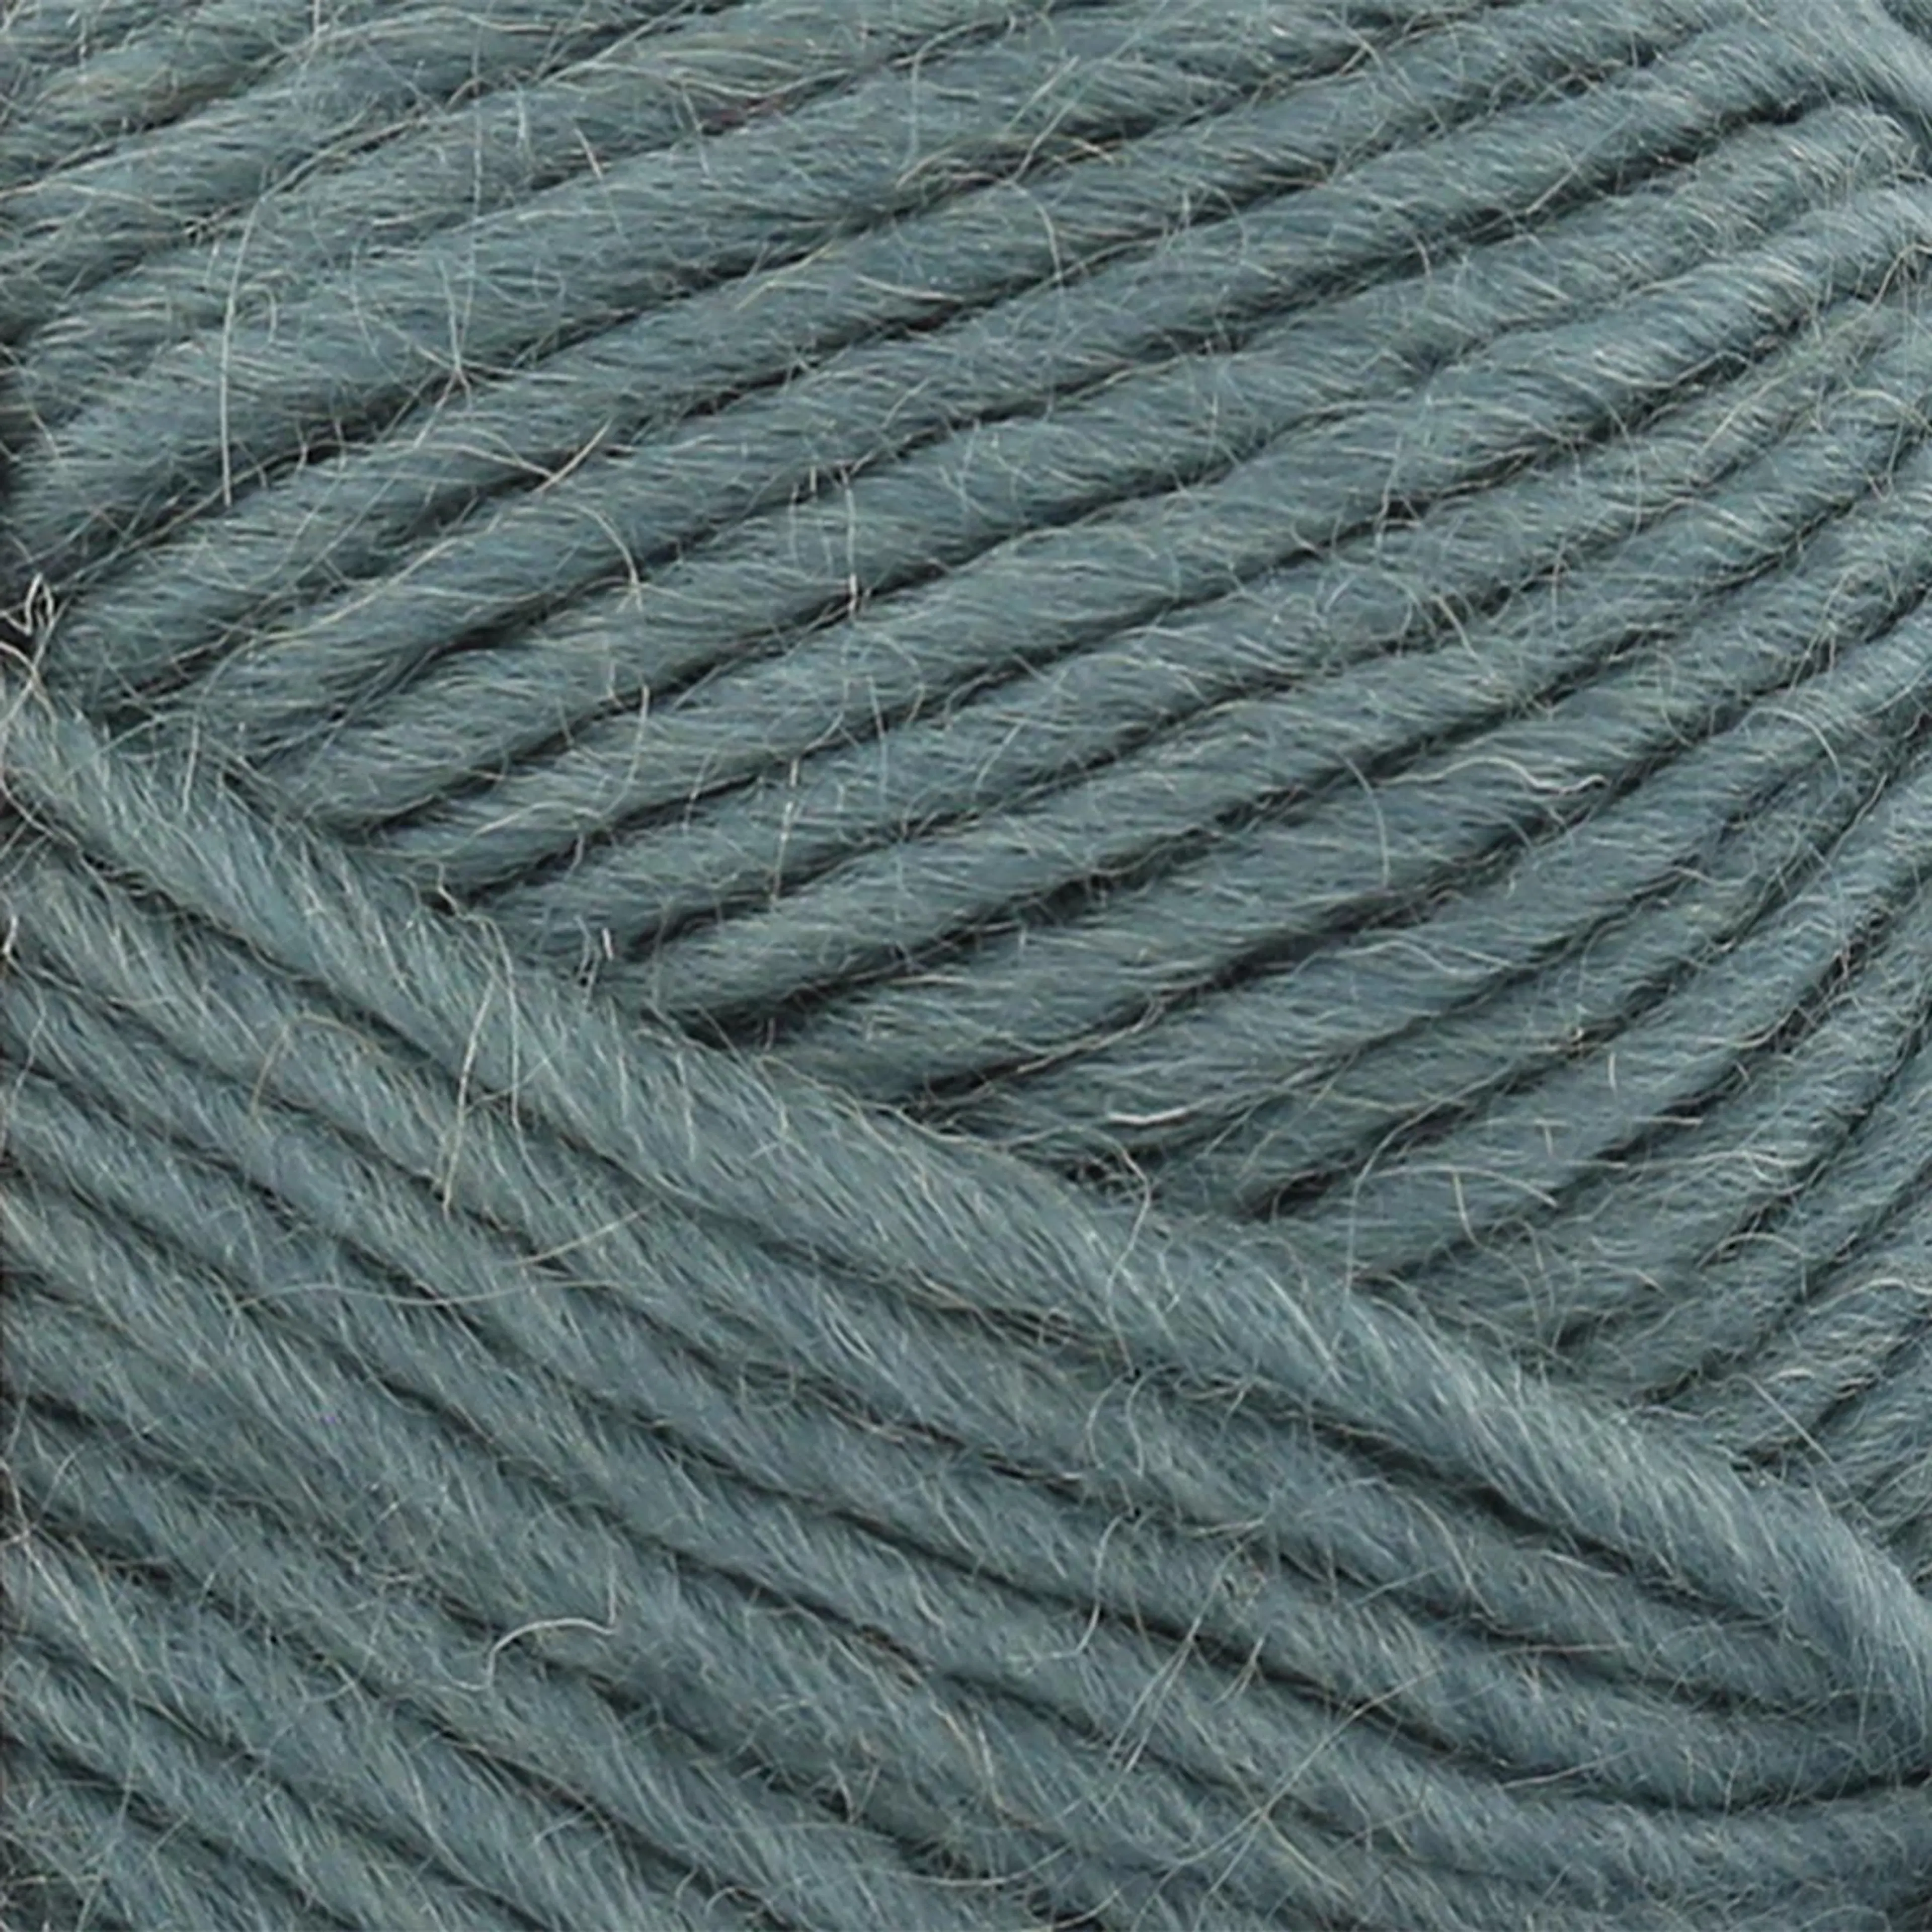 Novita lanka Icelandic Wool 50 g haikeus 301